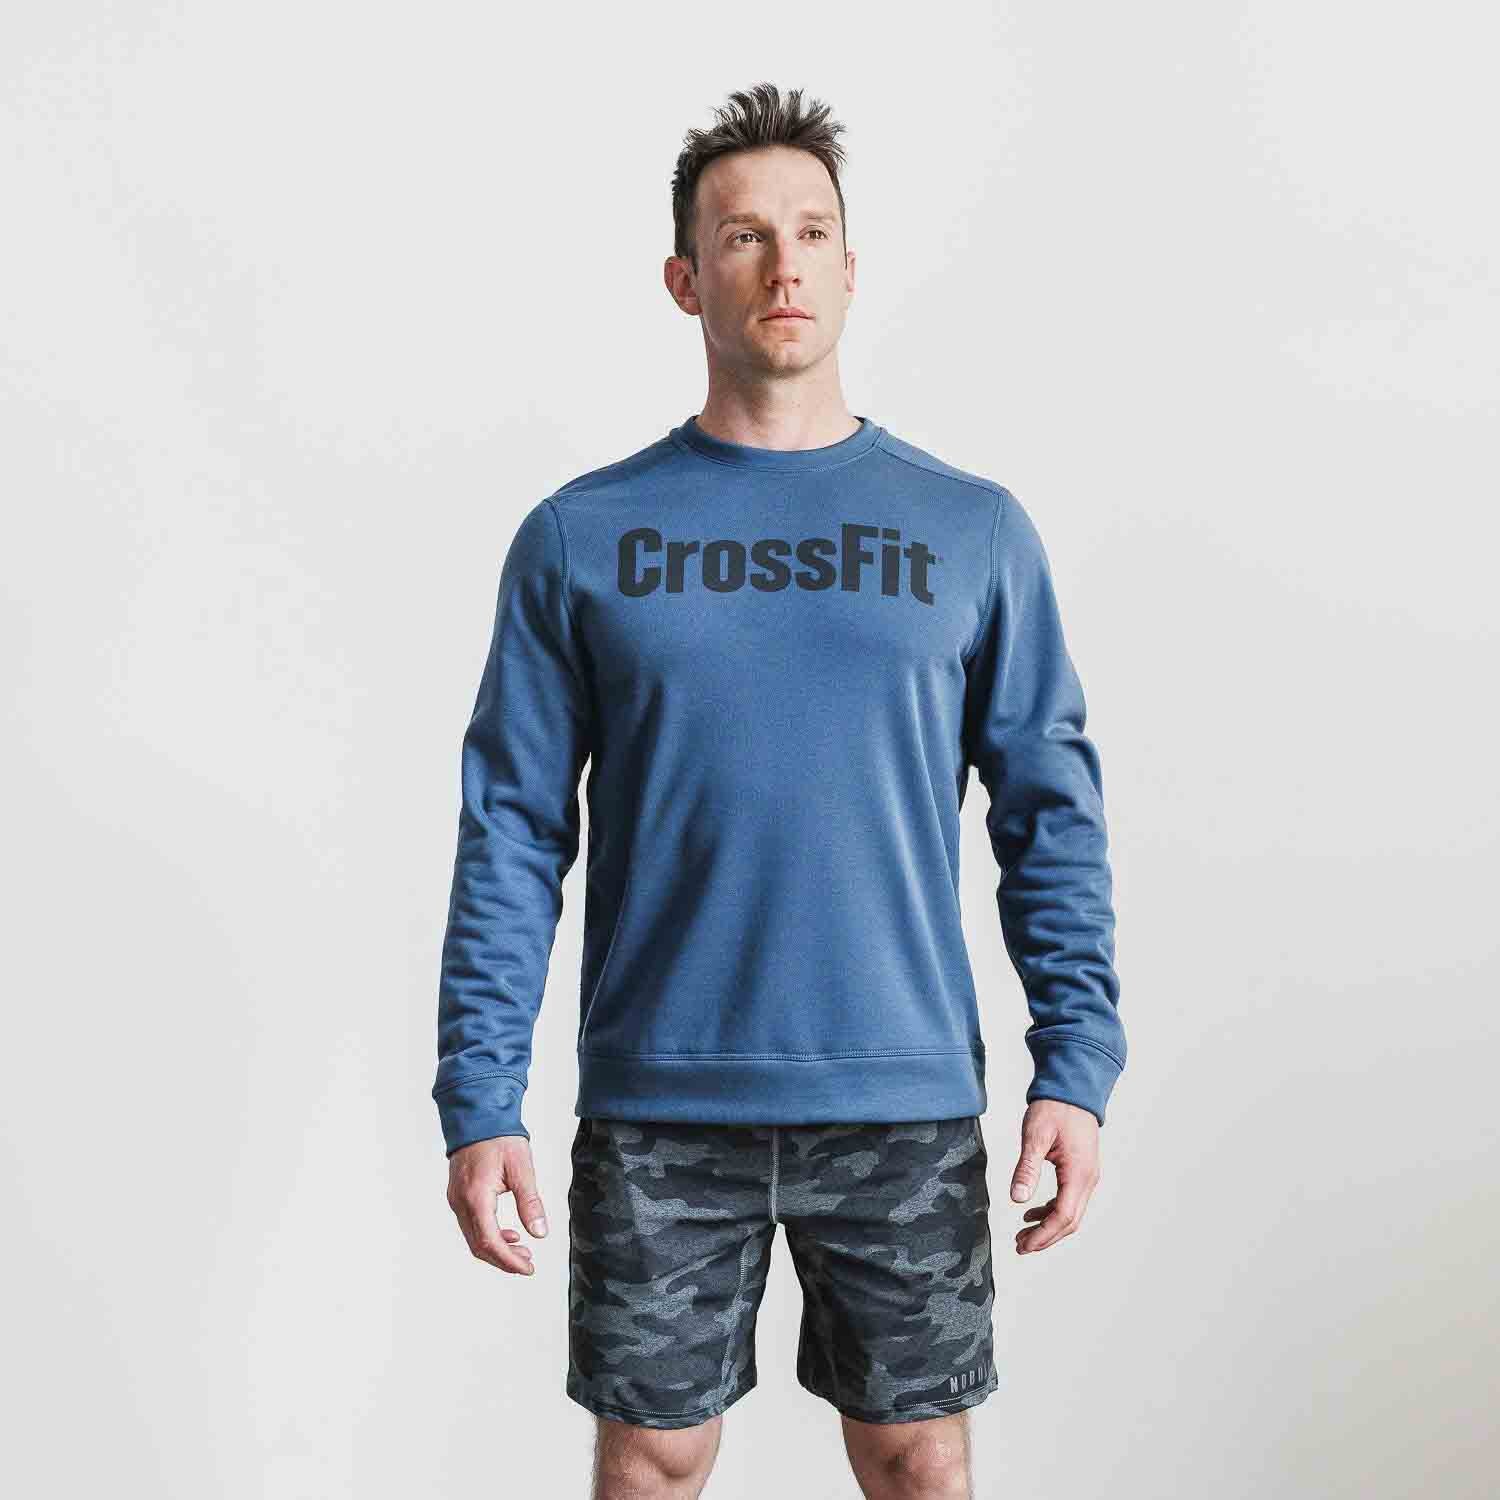 41 Best CrossFit Gifts for 2022 - Best CrossFit Gifts for Men